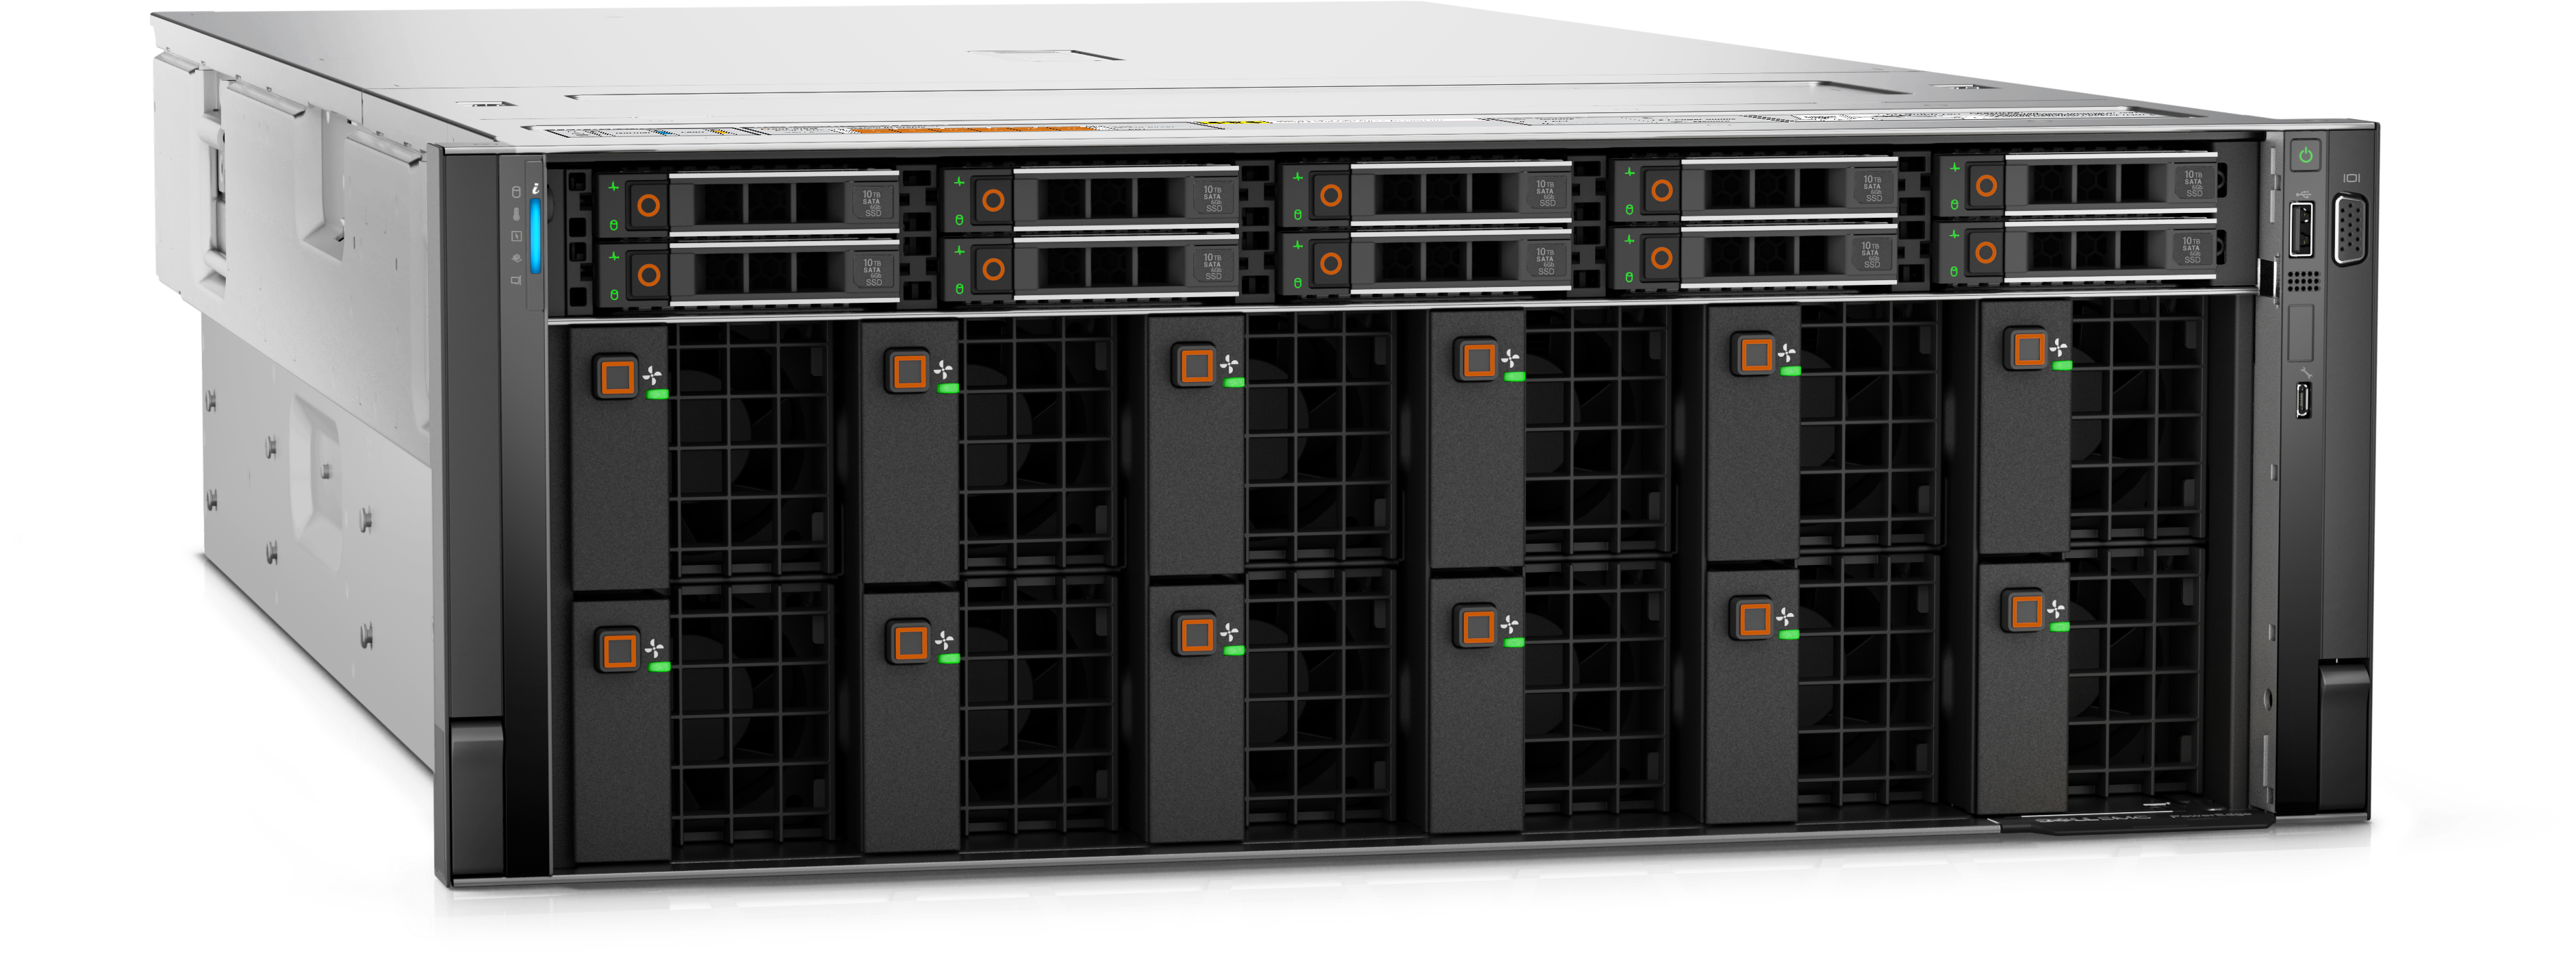 PowerEdge XE8545 Rack Server